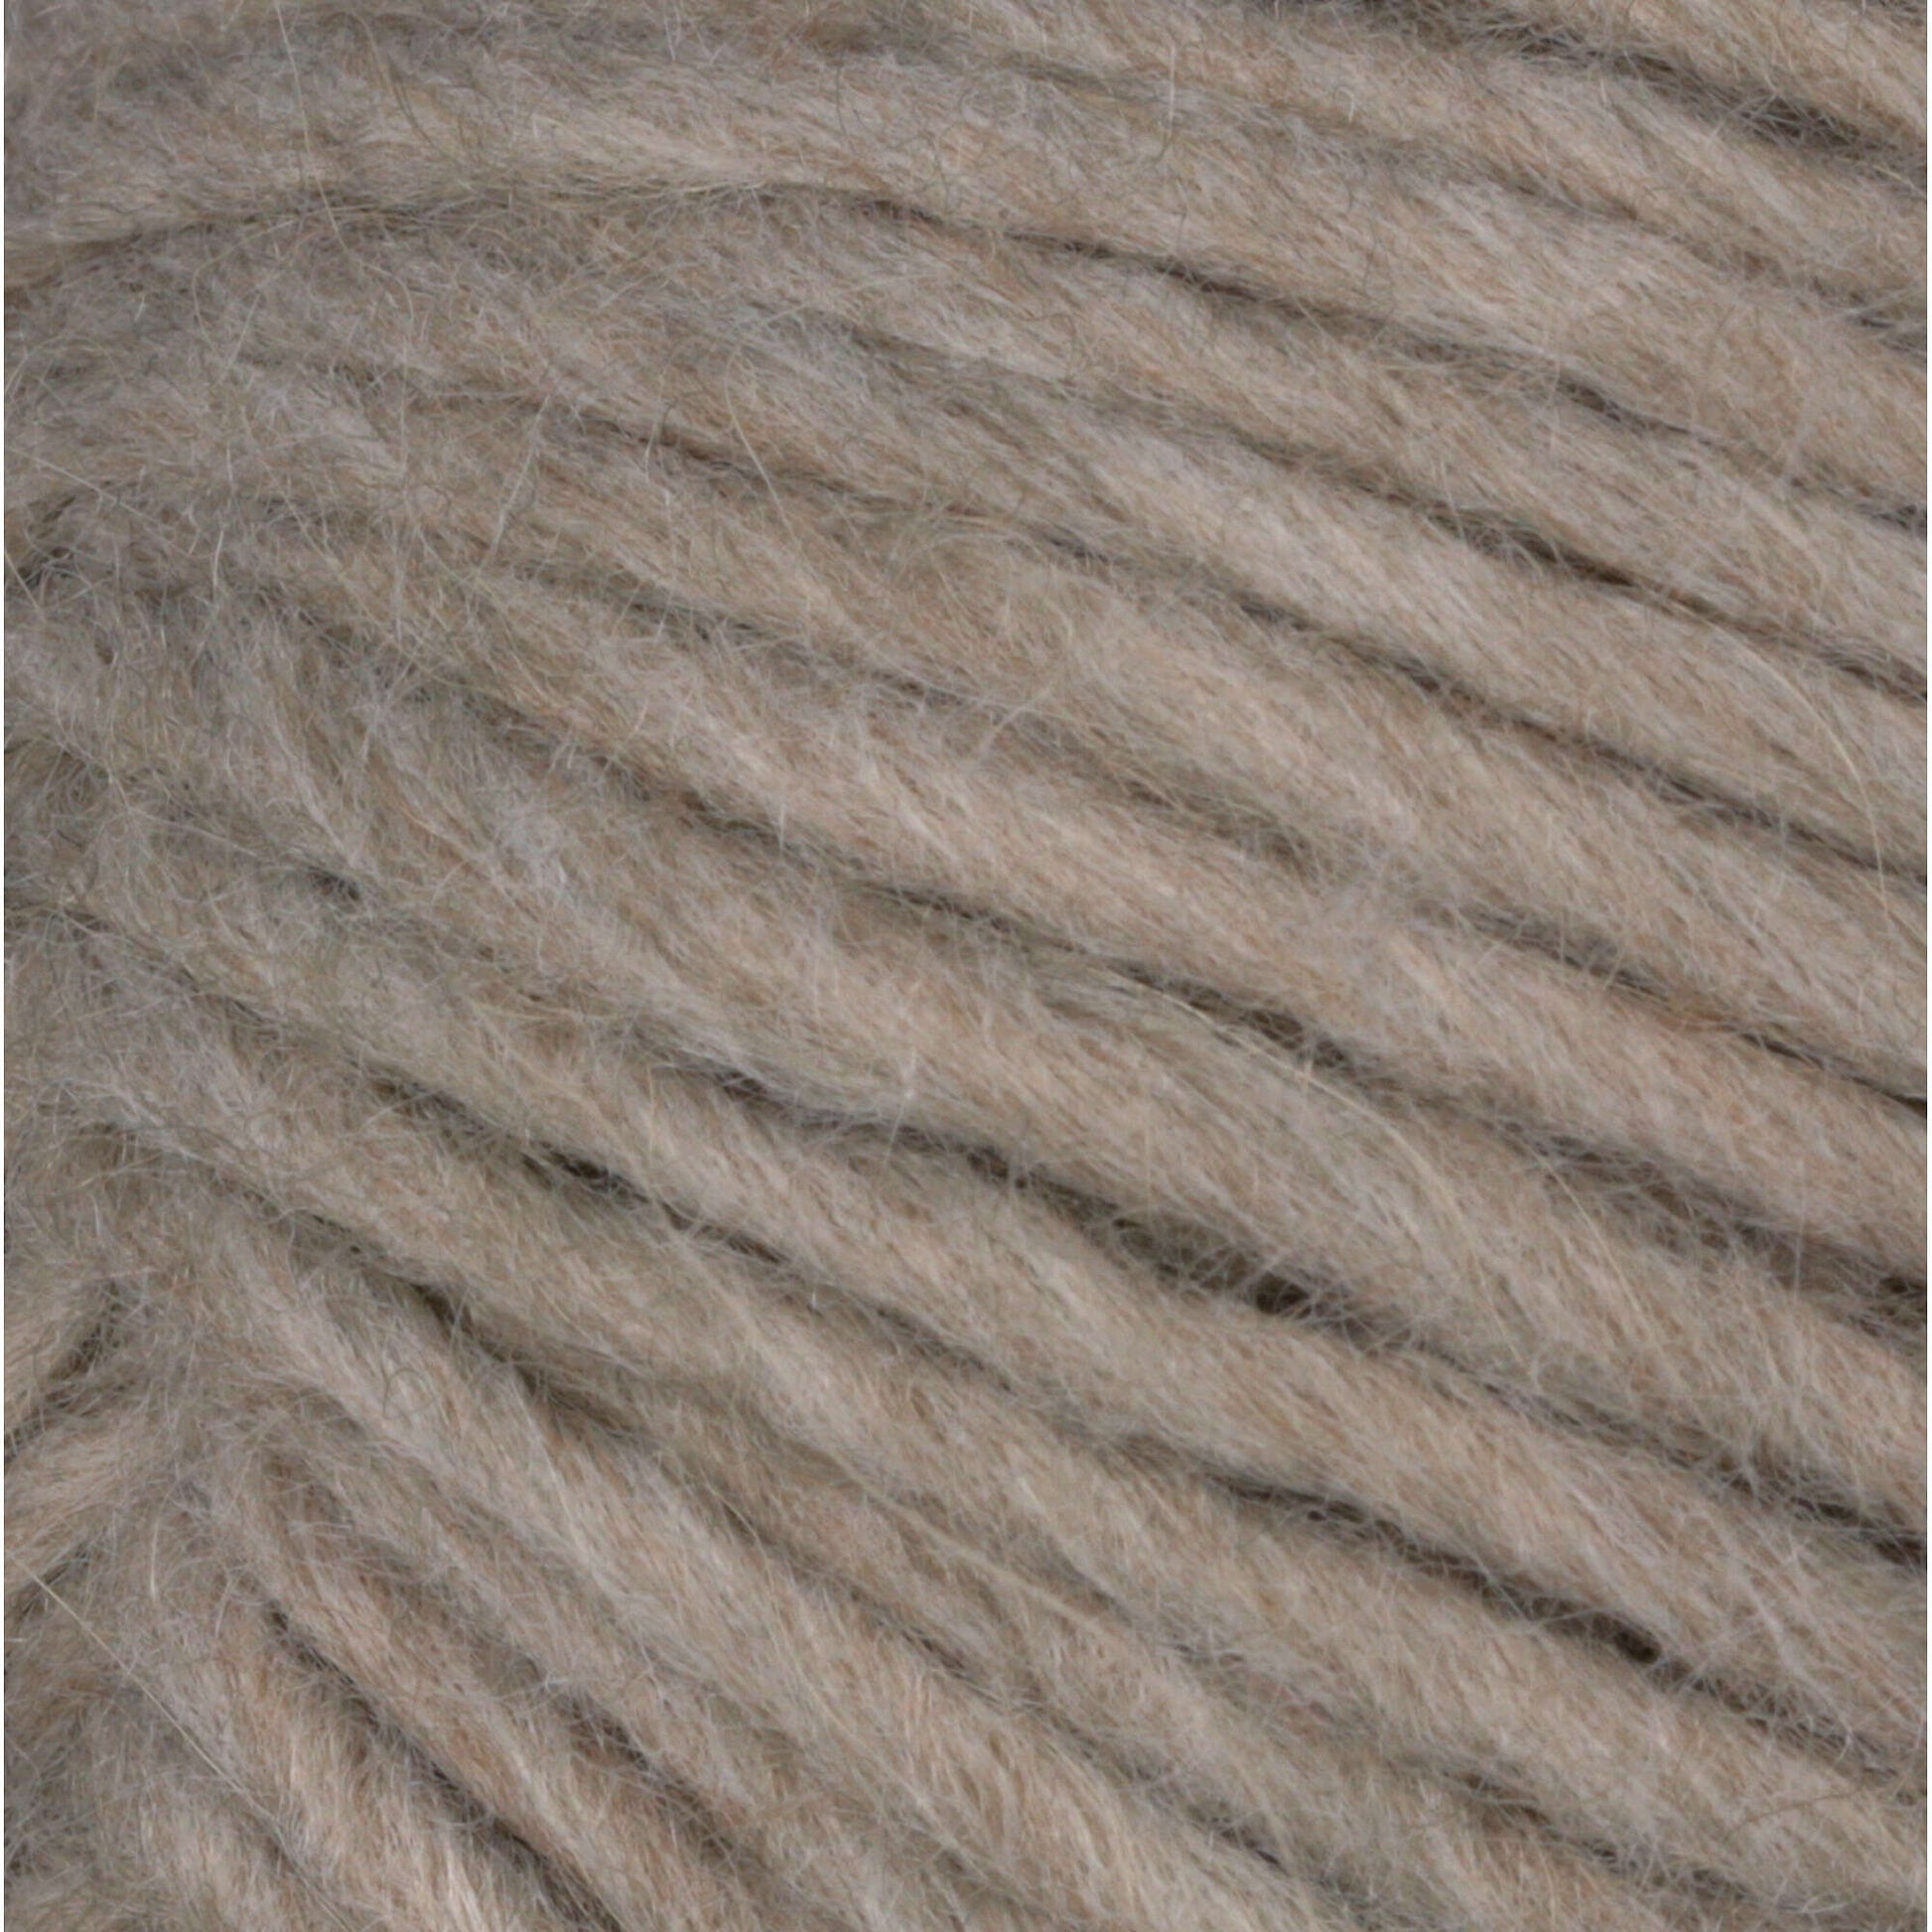 Patons Alpaca Blend Yarn - Discontinued Shades